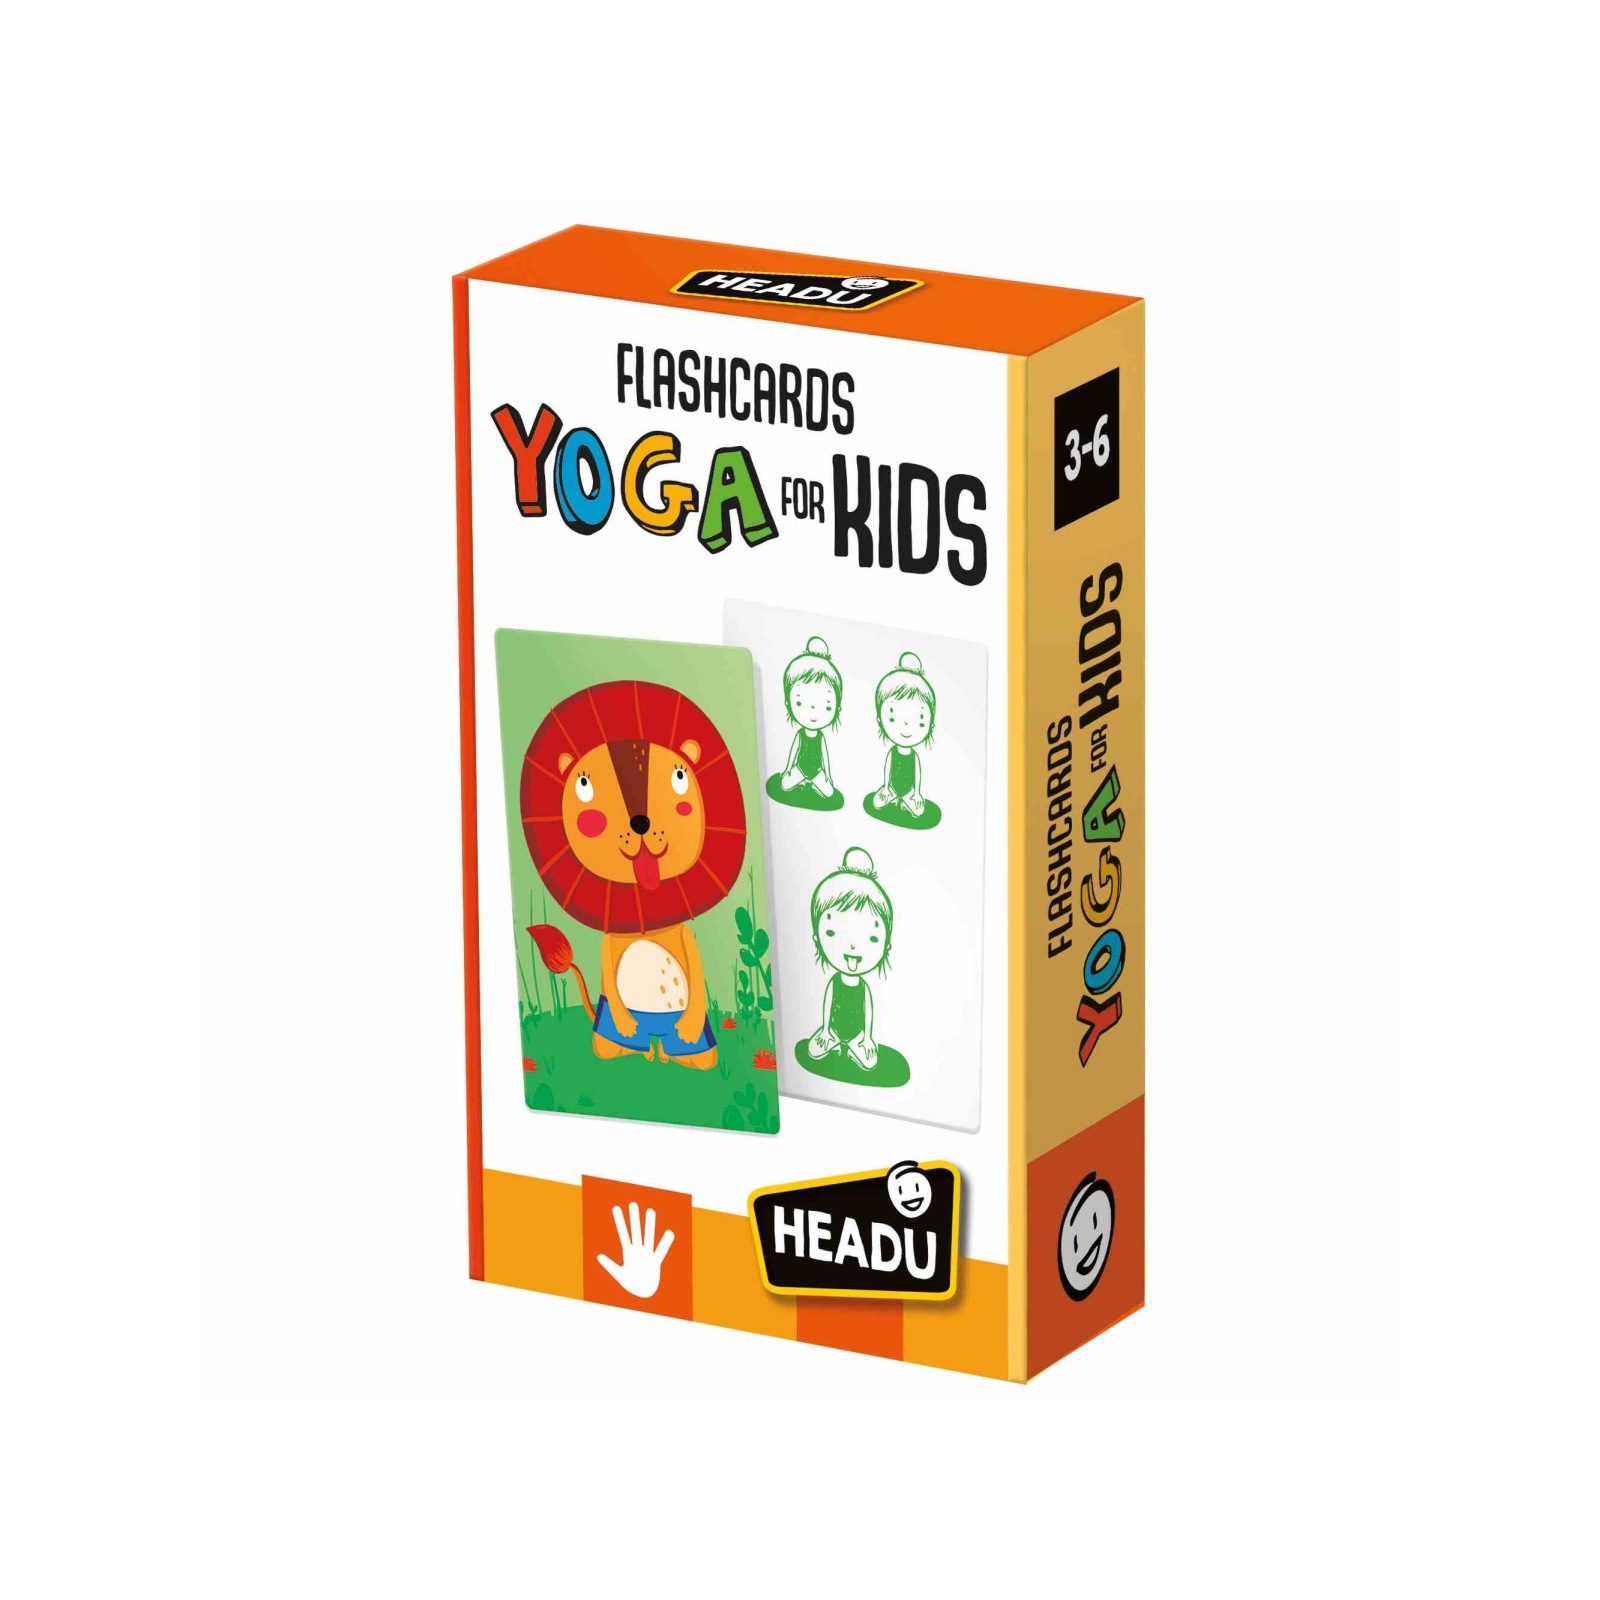 Headu - flashcards yoga for kids - gioca con il corpo e la fantasia! - HEADU